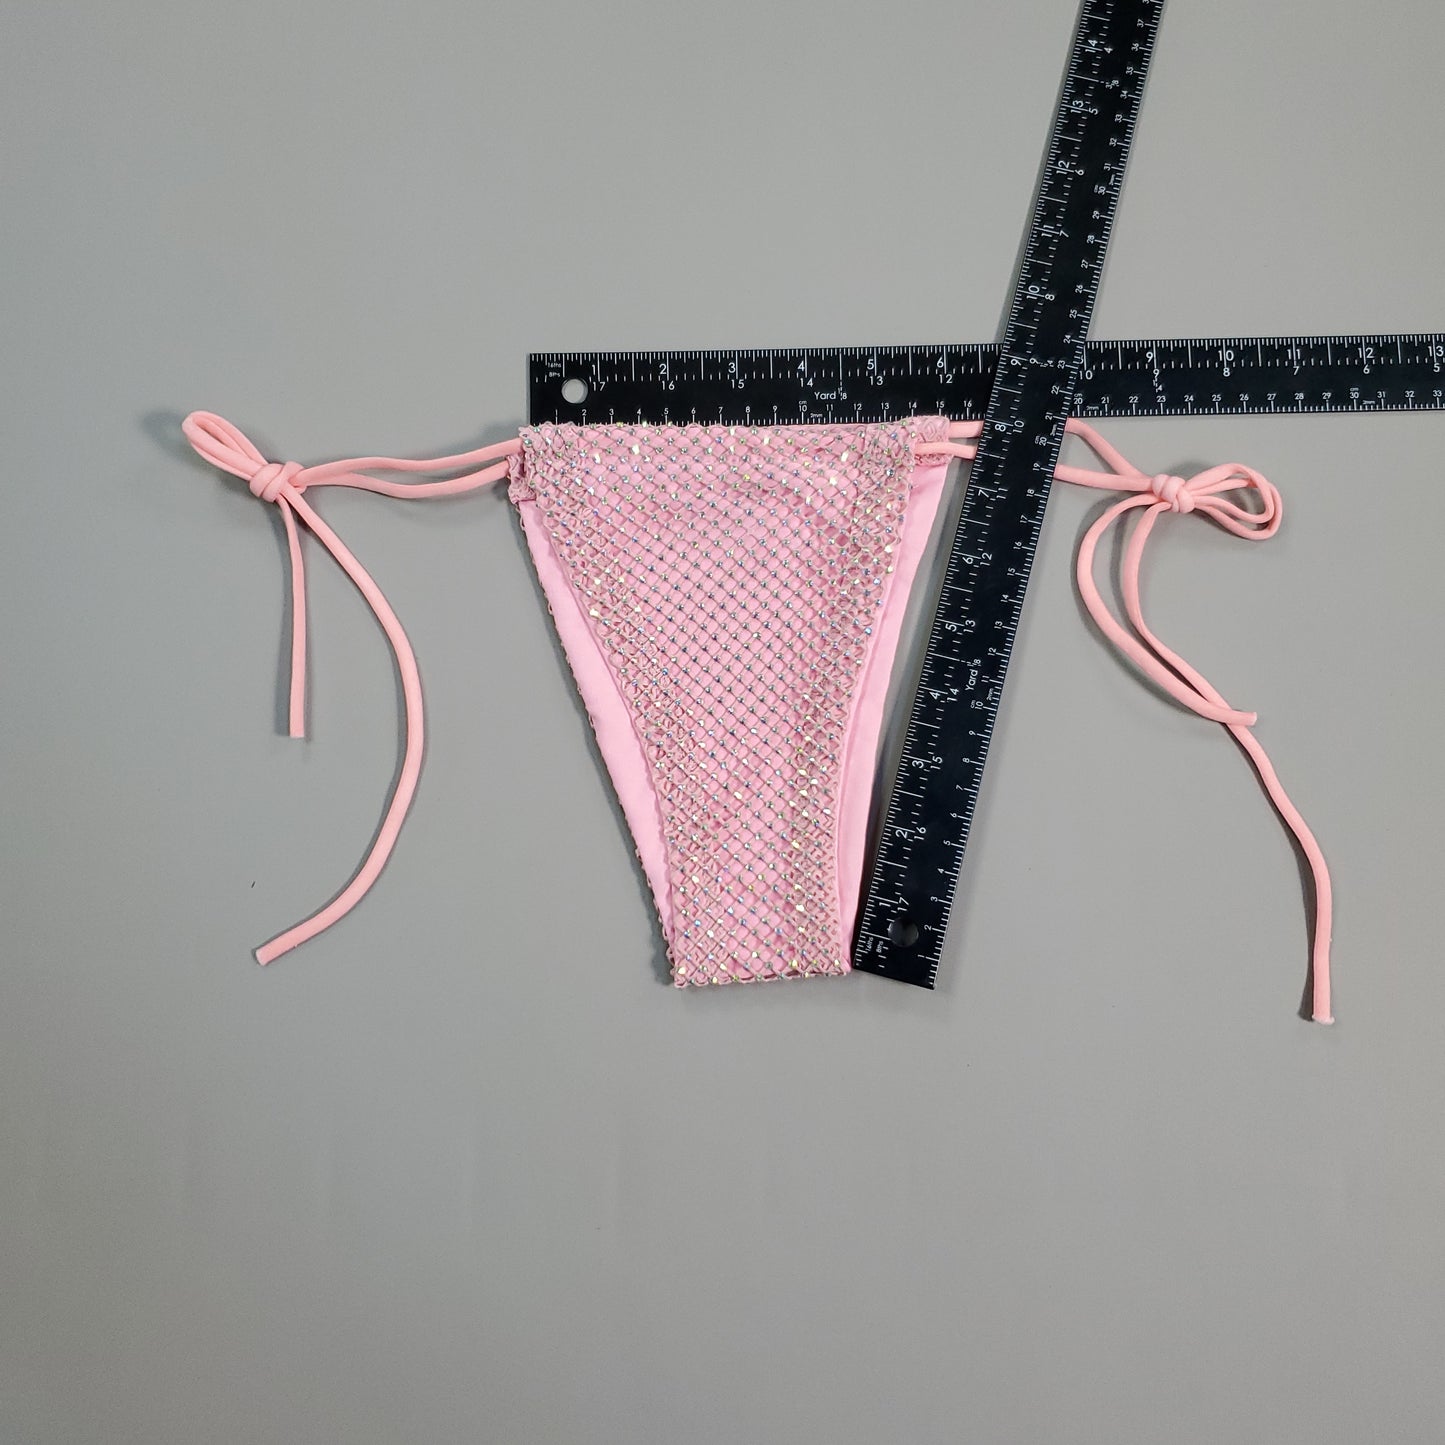 NEVA NUDE Shiney Hiney Iridescent Pink Crystal High Waisted Pantie Lingerie JBOT-PIN-NKM (New)